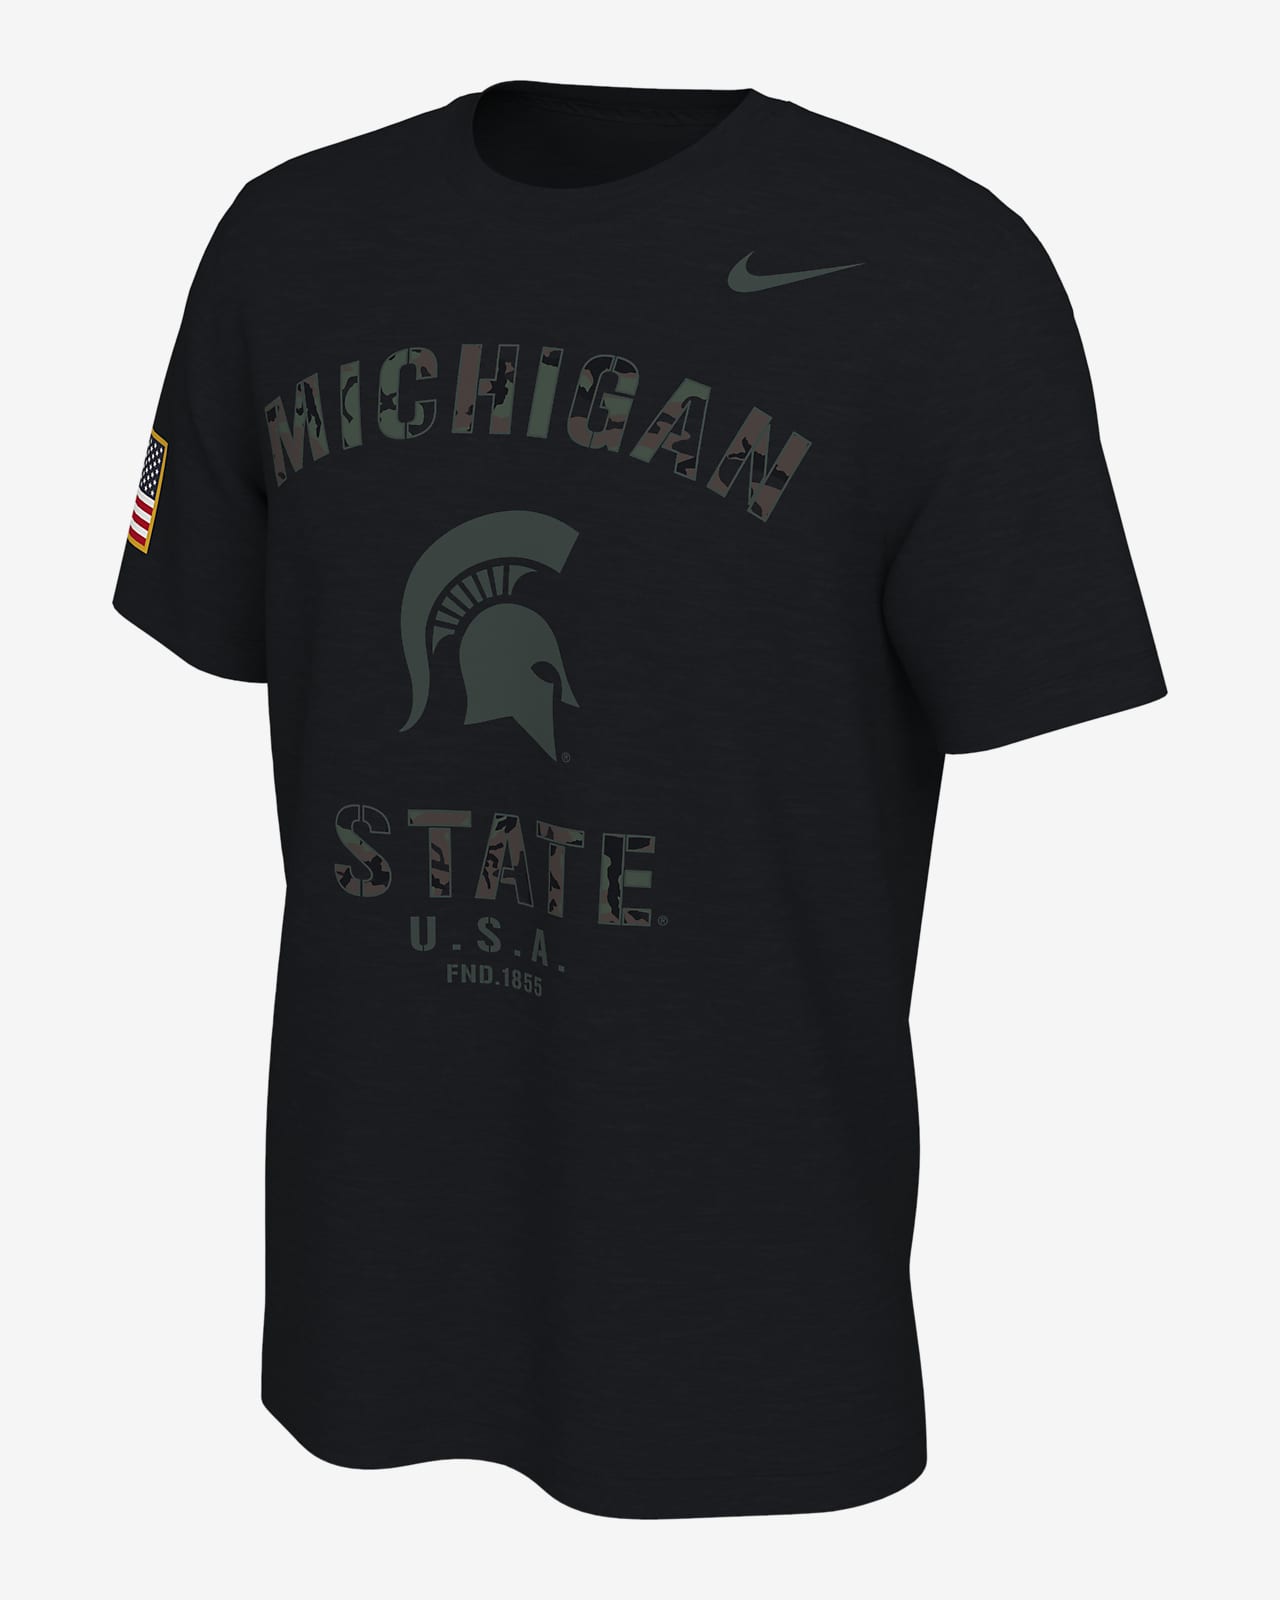 Nike College (Michigan State) Men's Graphic T-Shirt